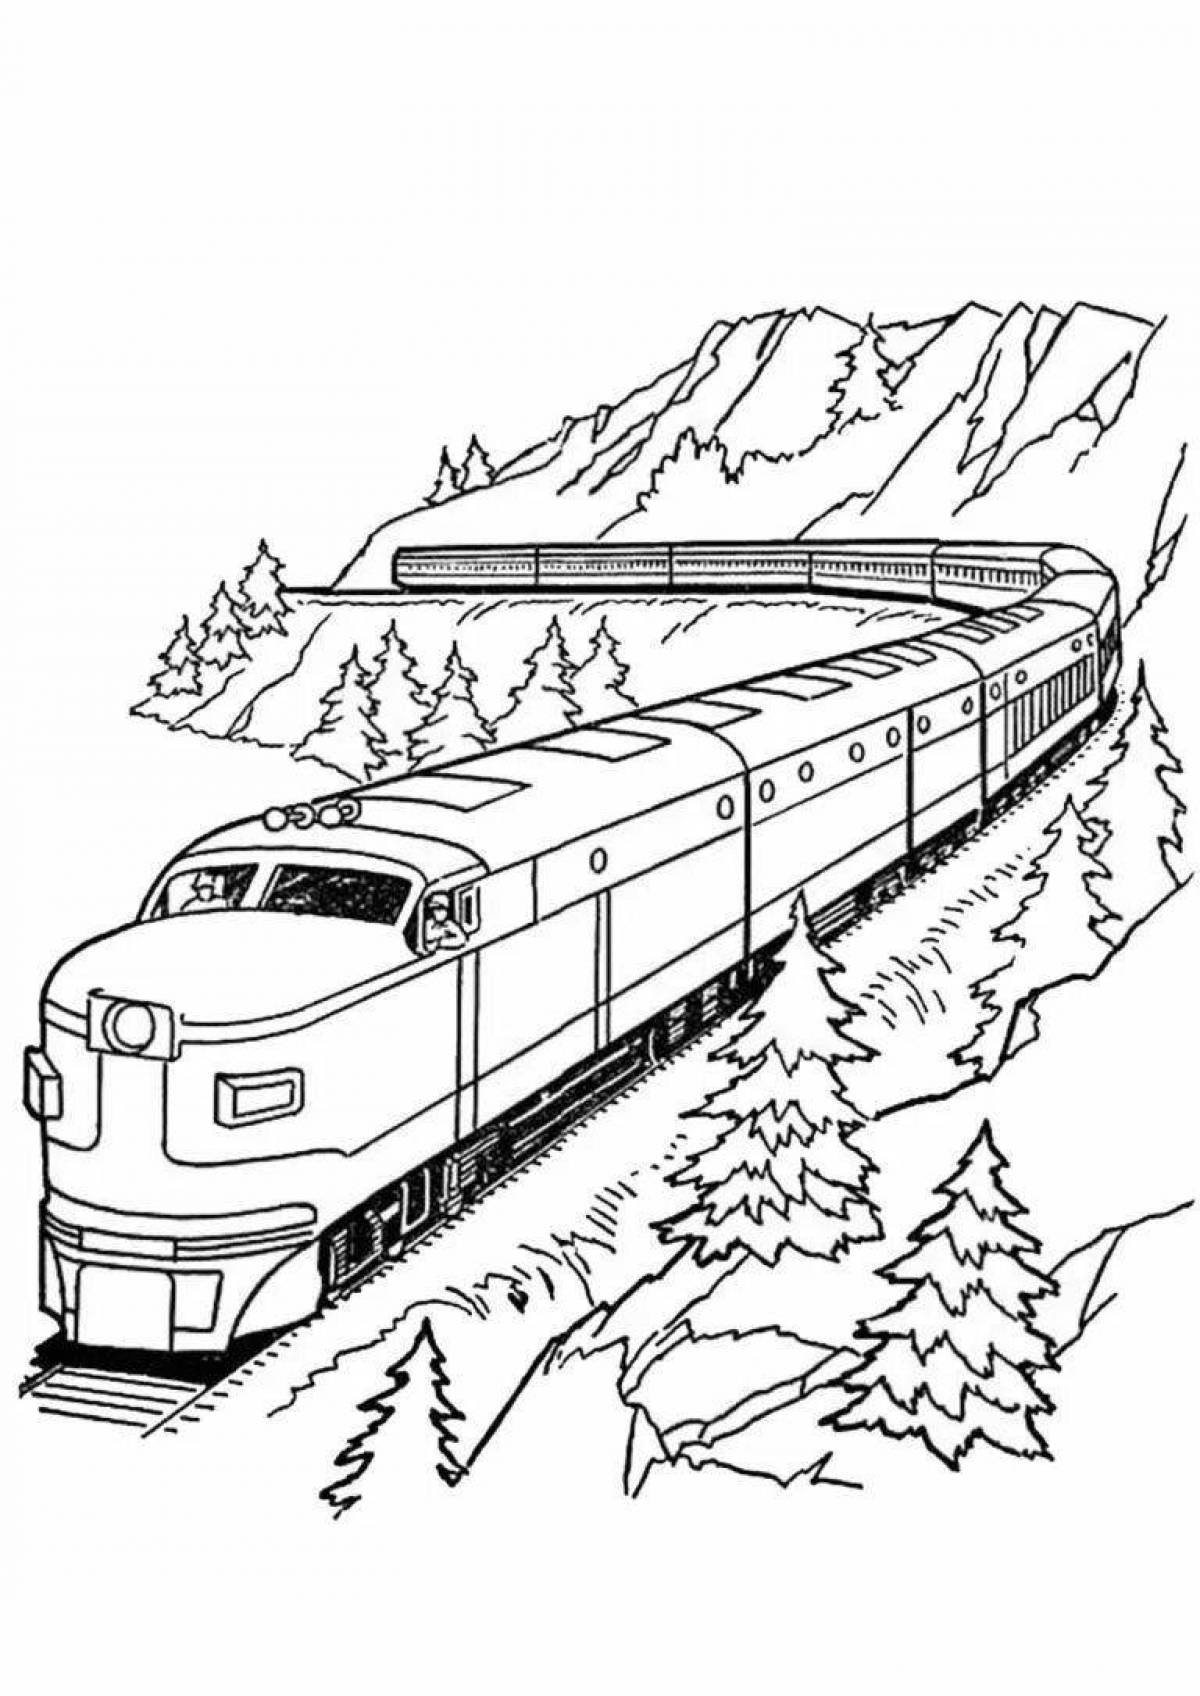 Illustration of a fun train